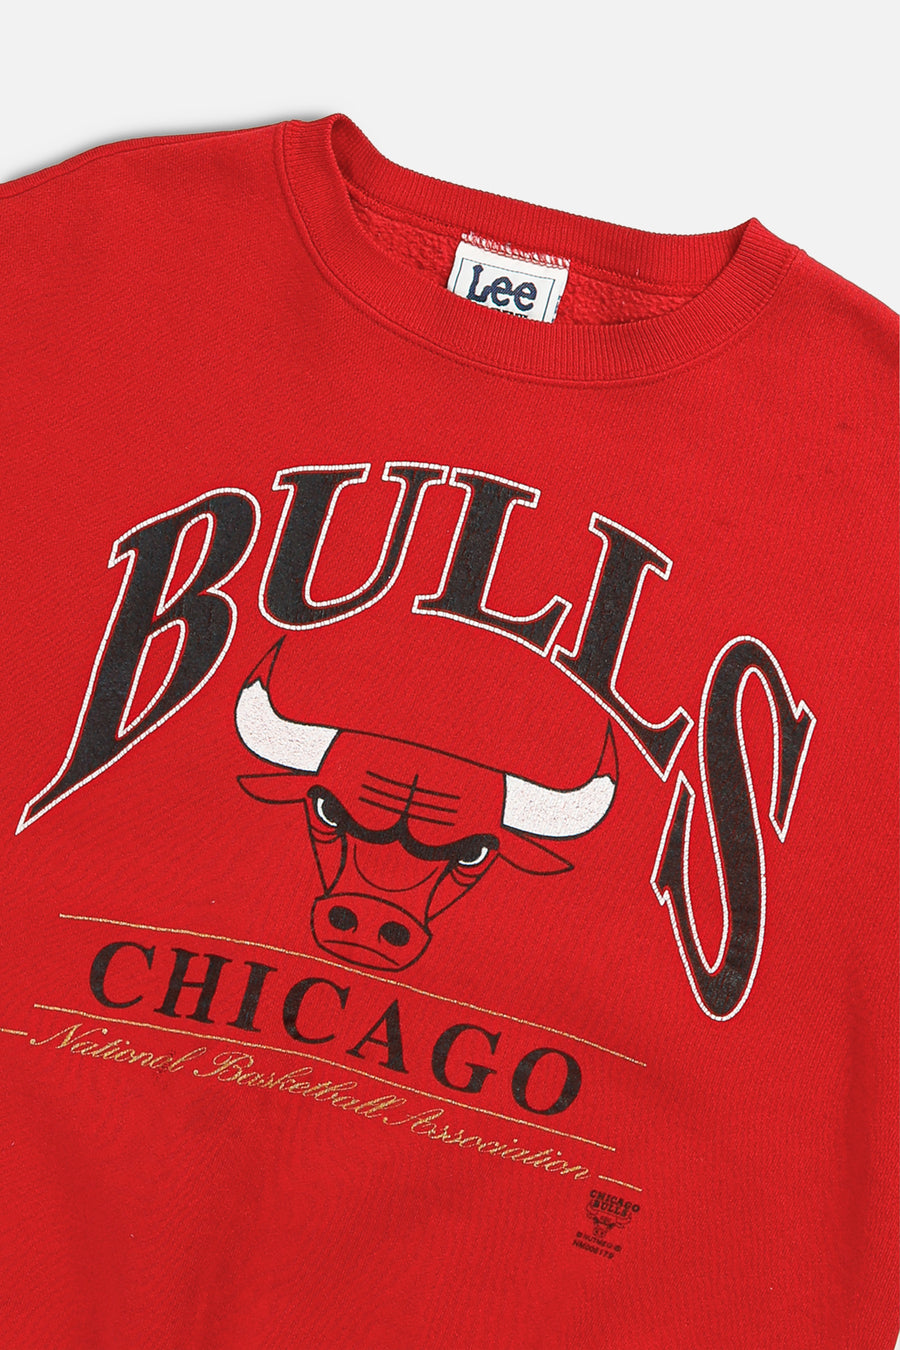 Vintage Chicago Bulls NBA Sweatshirt - XL